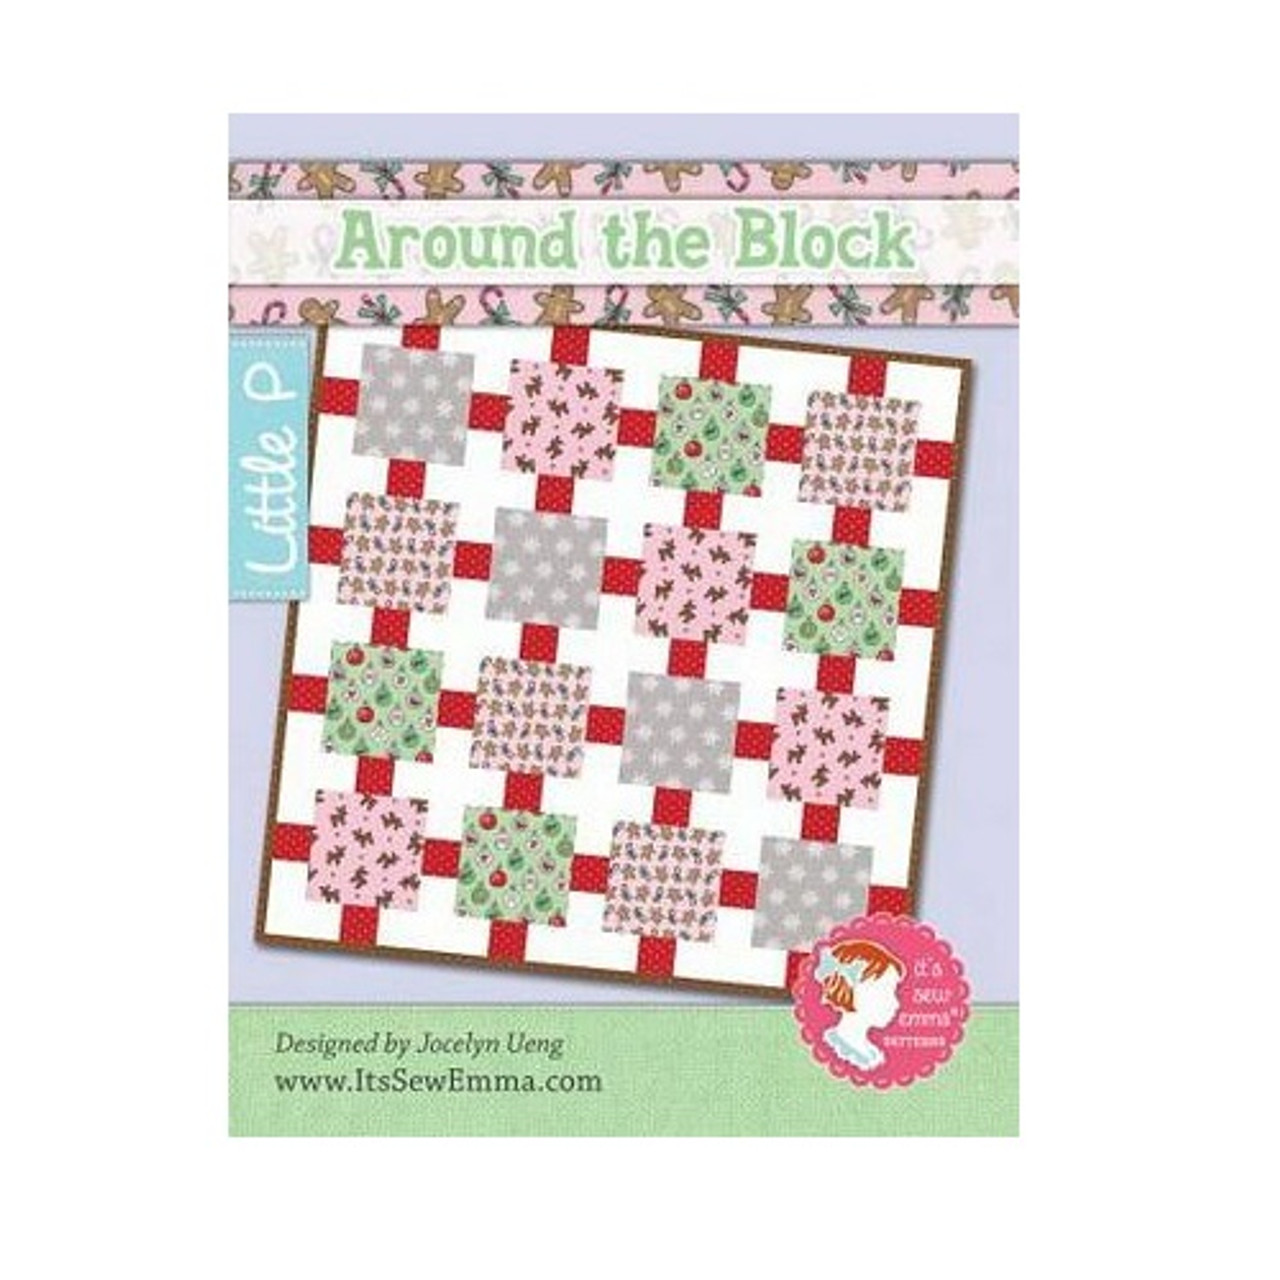 Around the Block - It's Sew Emma - Pattern